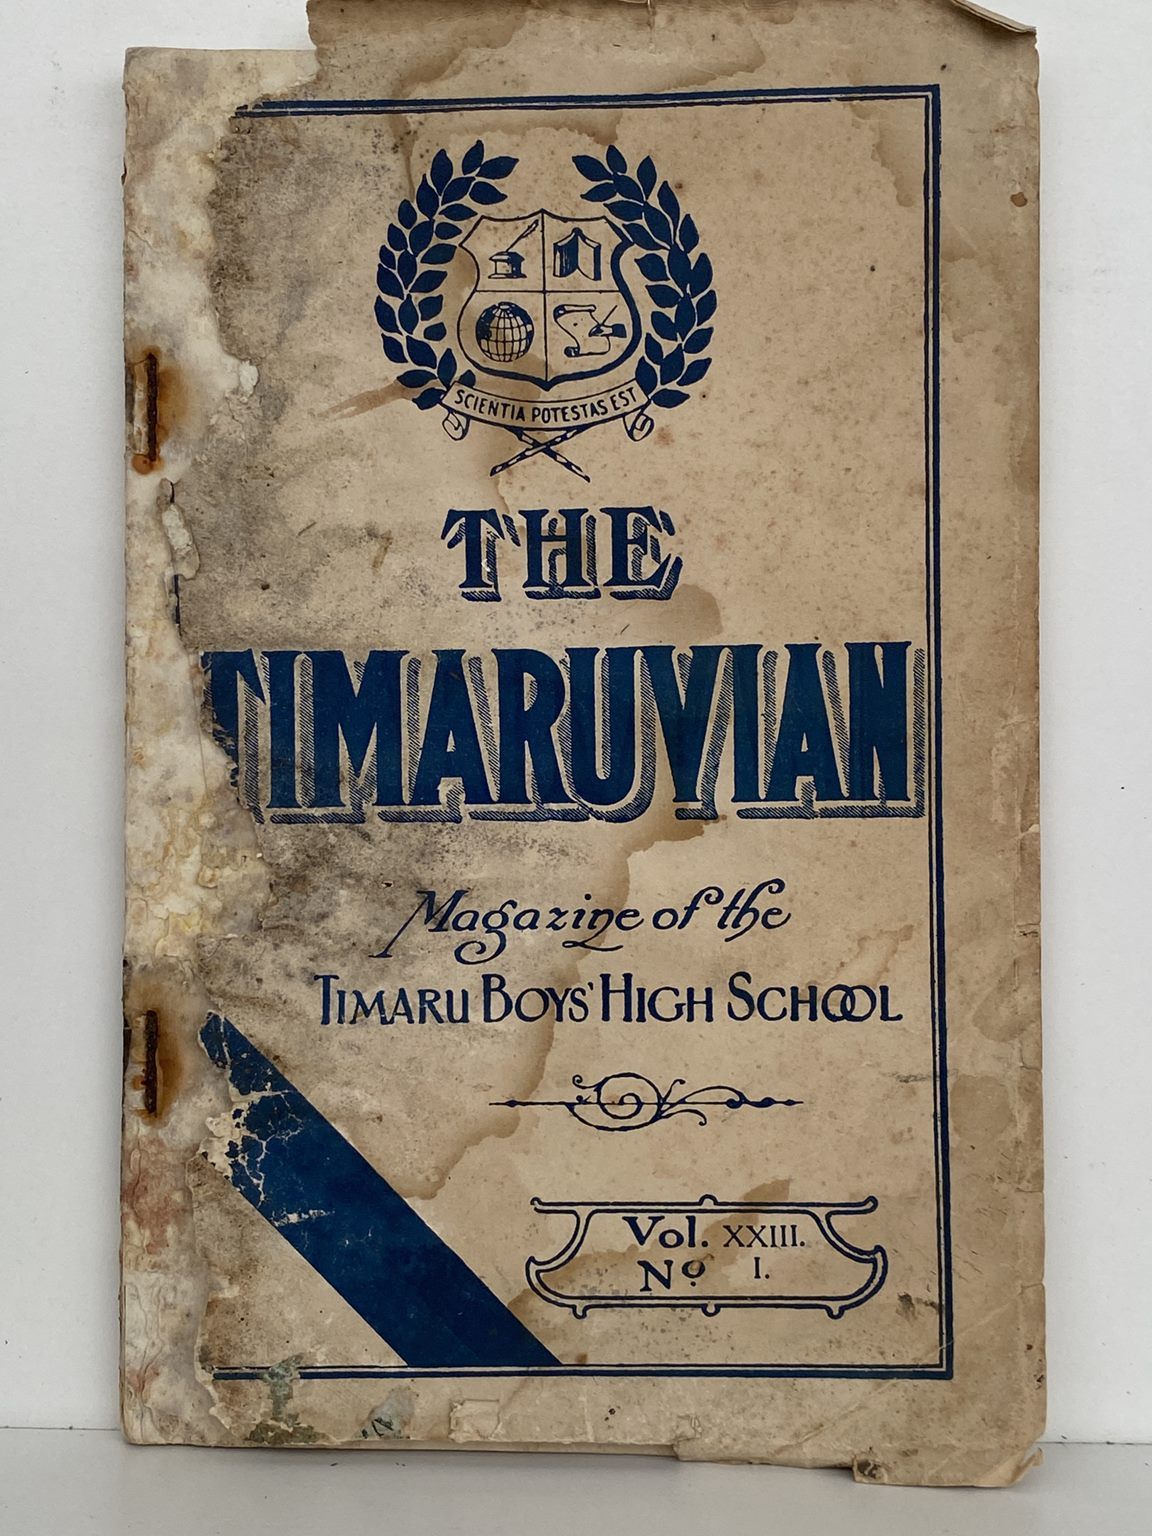 THE TIMARUVIAN: Magazine of the Timaru Boys' High School - Vol XXIII, No.1